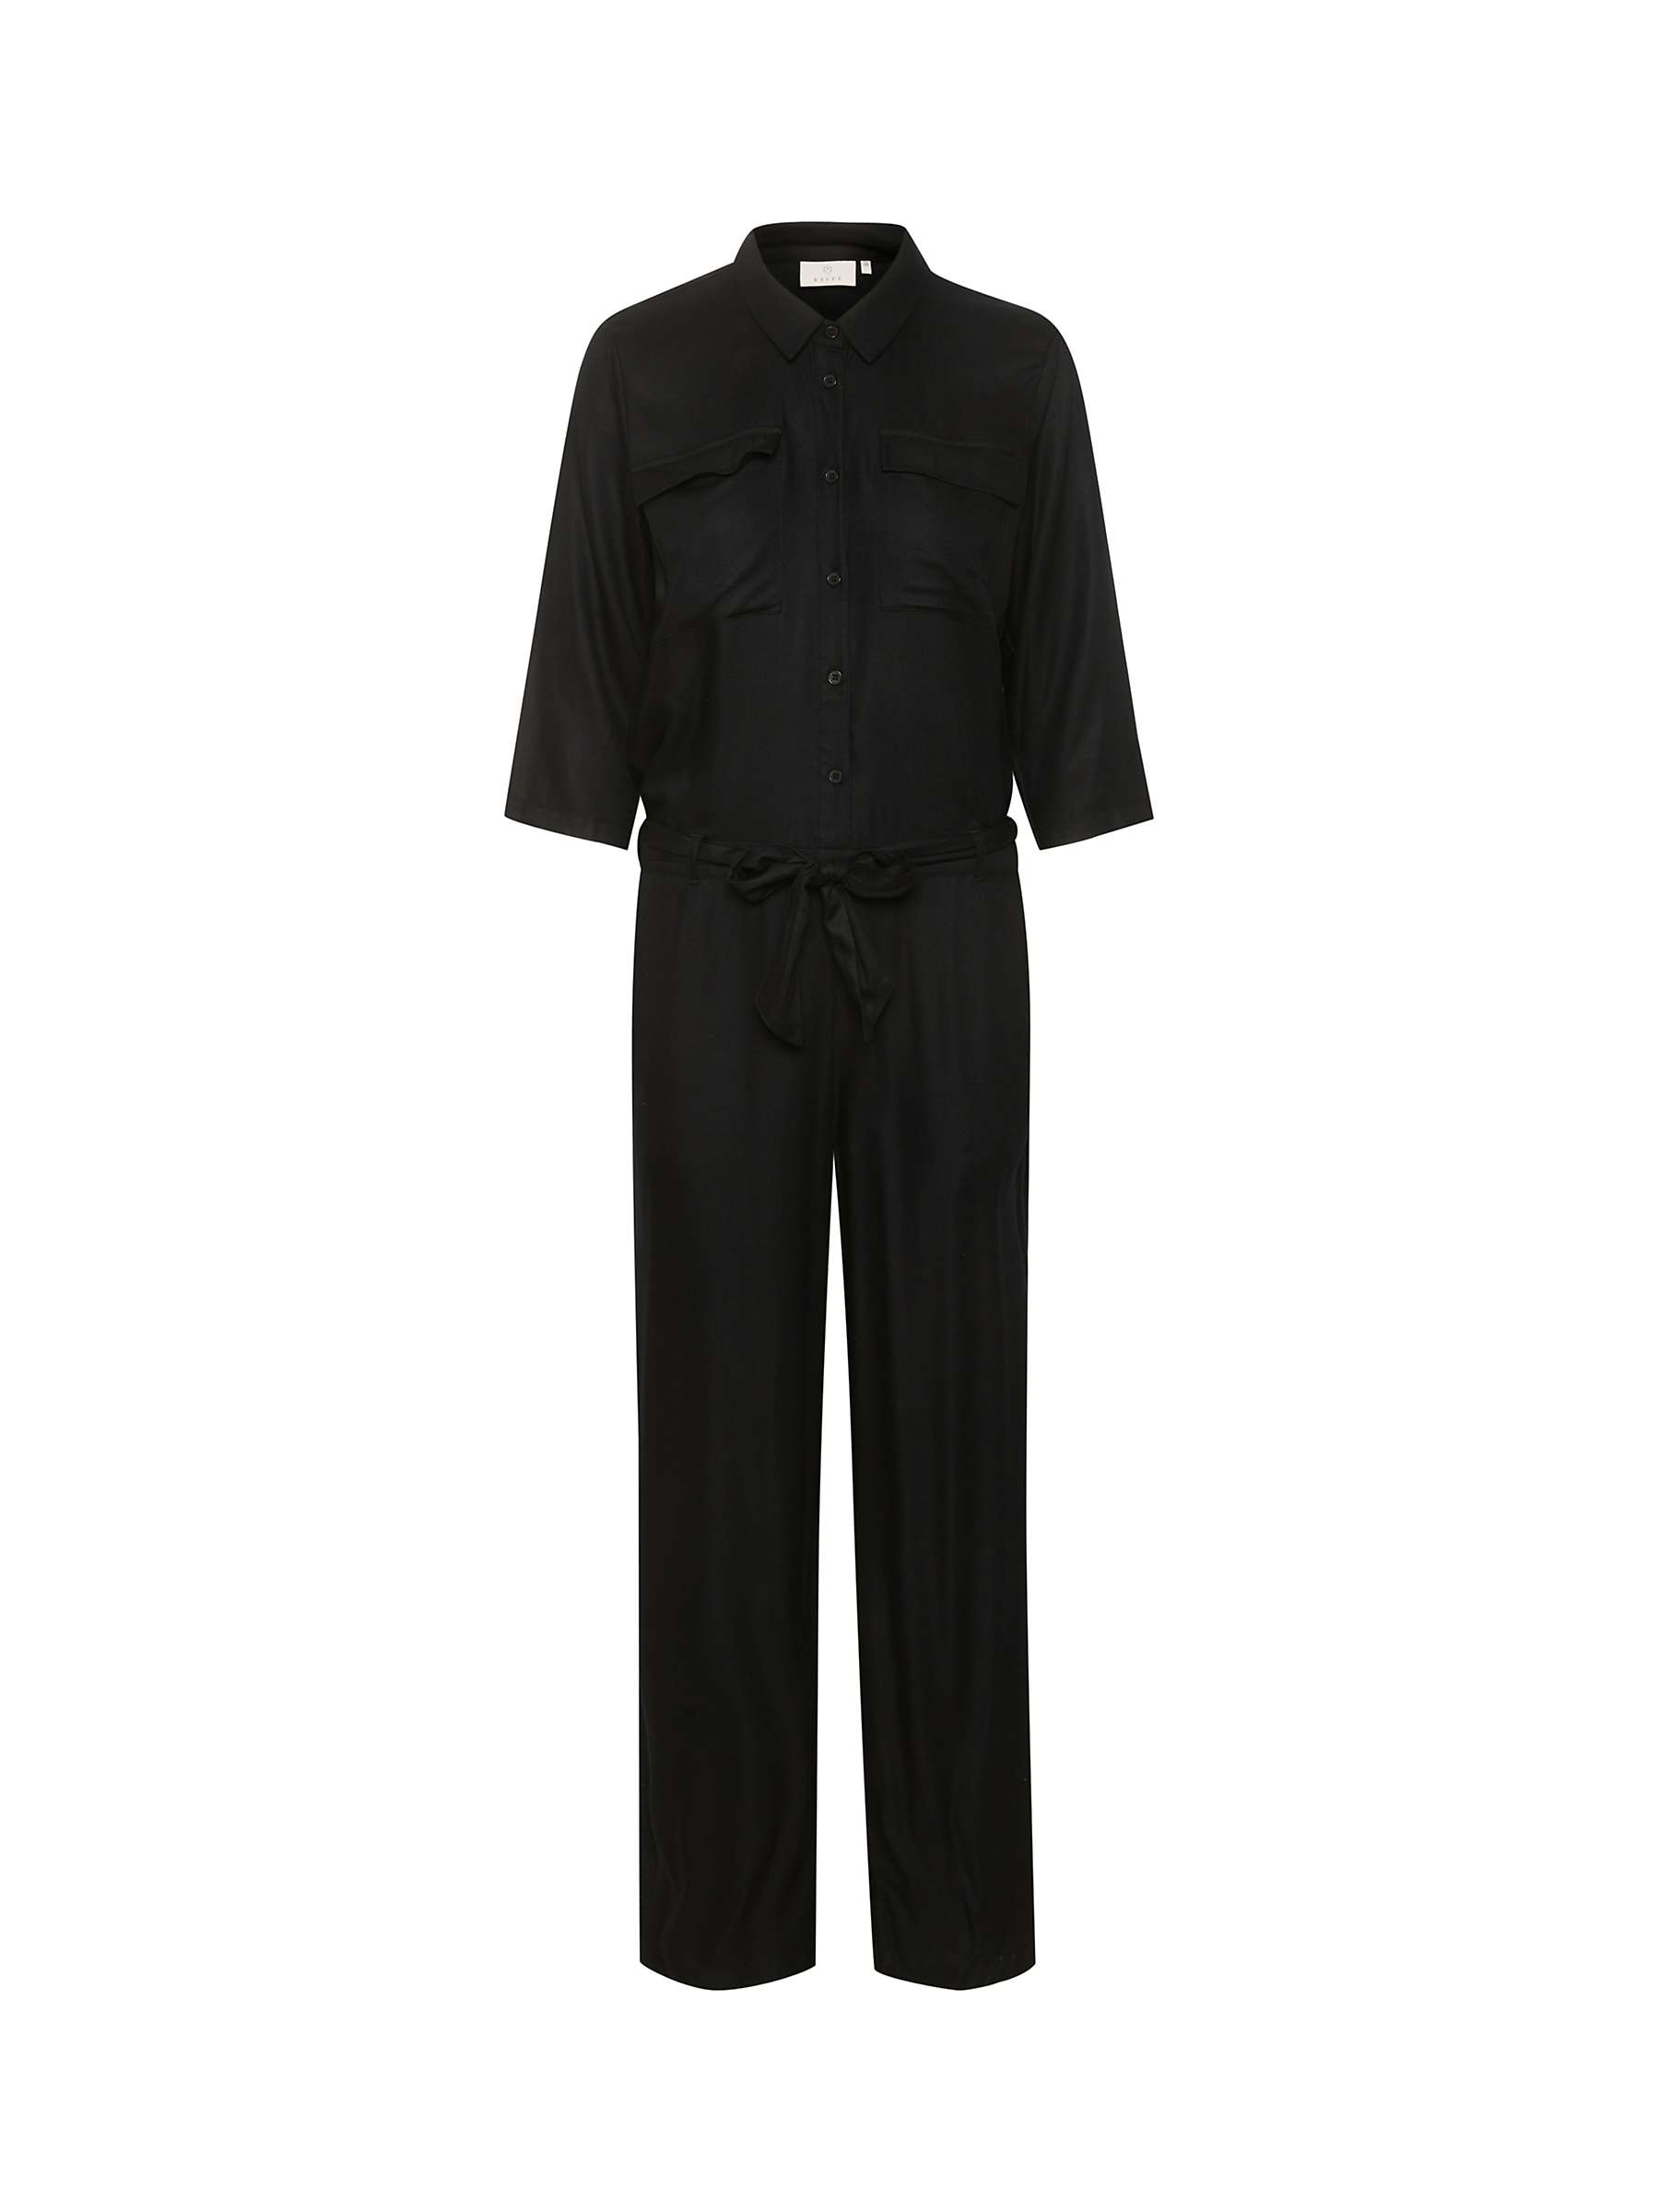 KAFFE Ruthie 3/4 Sleeve Boilersuit, Deep Black at John Lewis & Partners